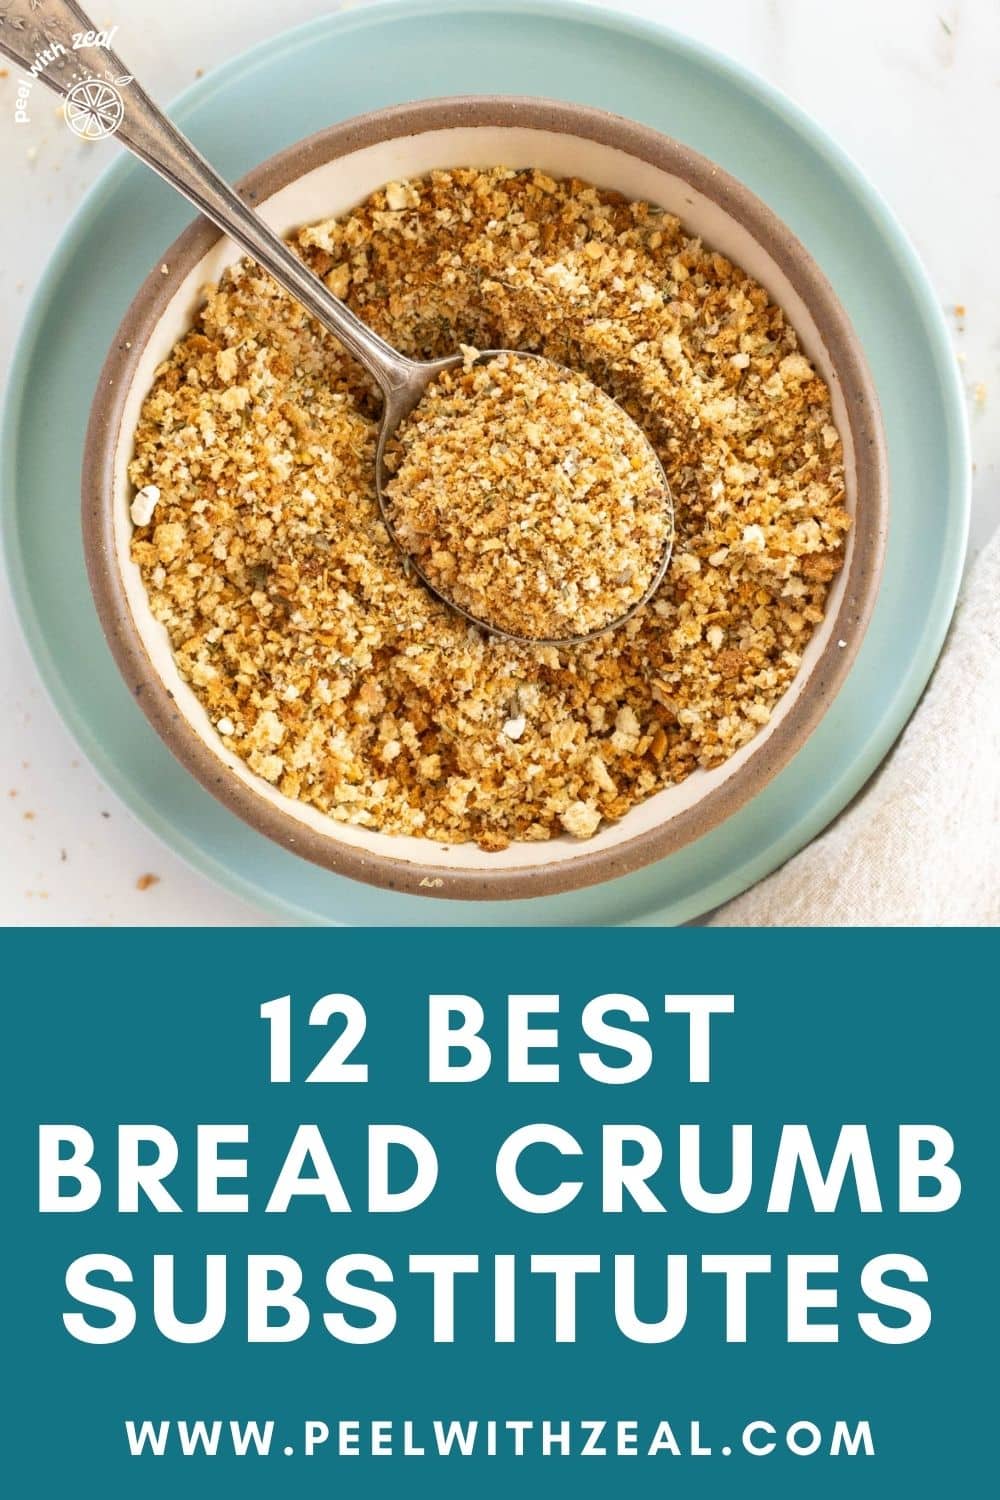 Bowl of gluten-free bread crumbs.